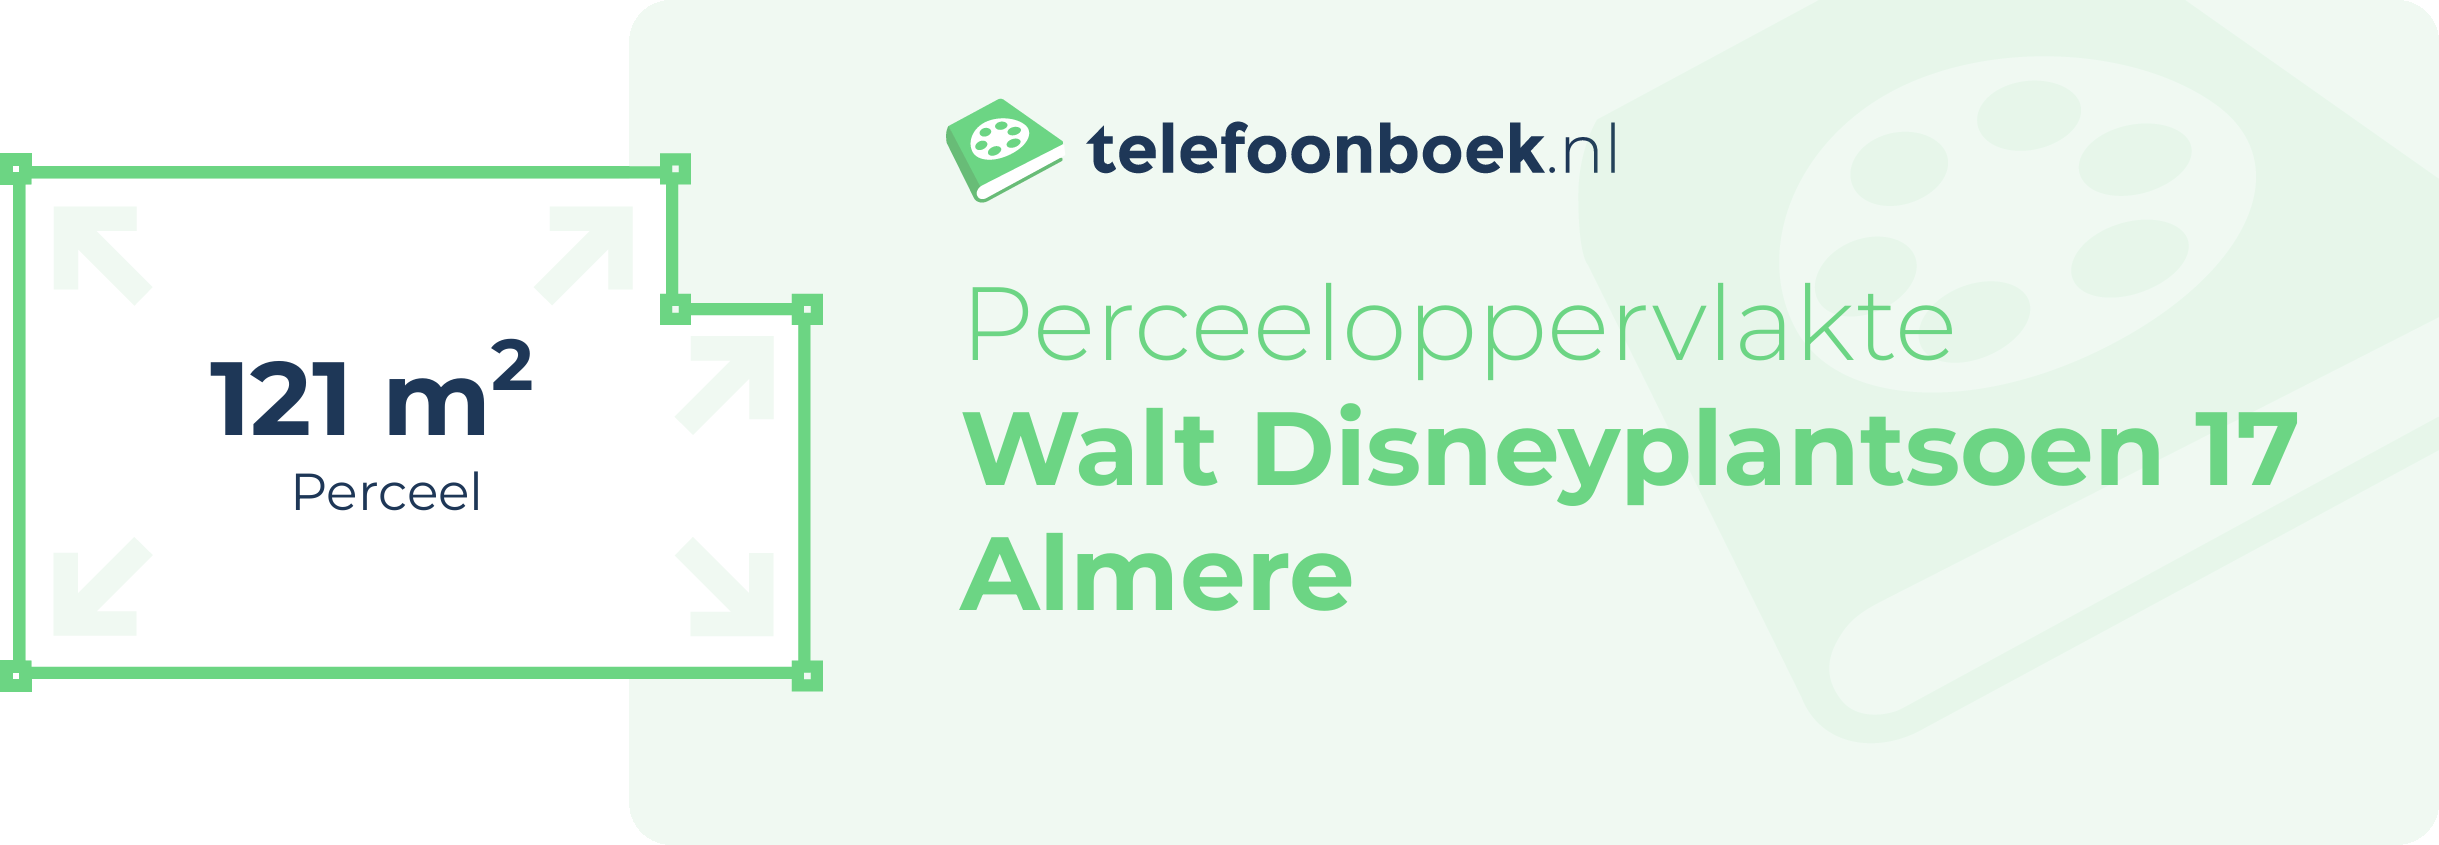 Perceeloppervlakte Walt Disneyplantsoen 17 Almere